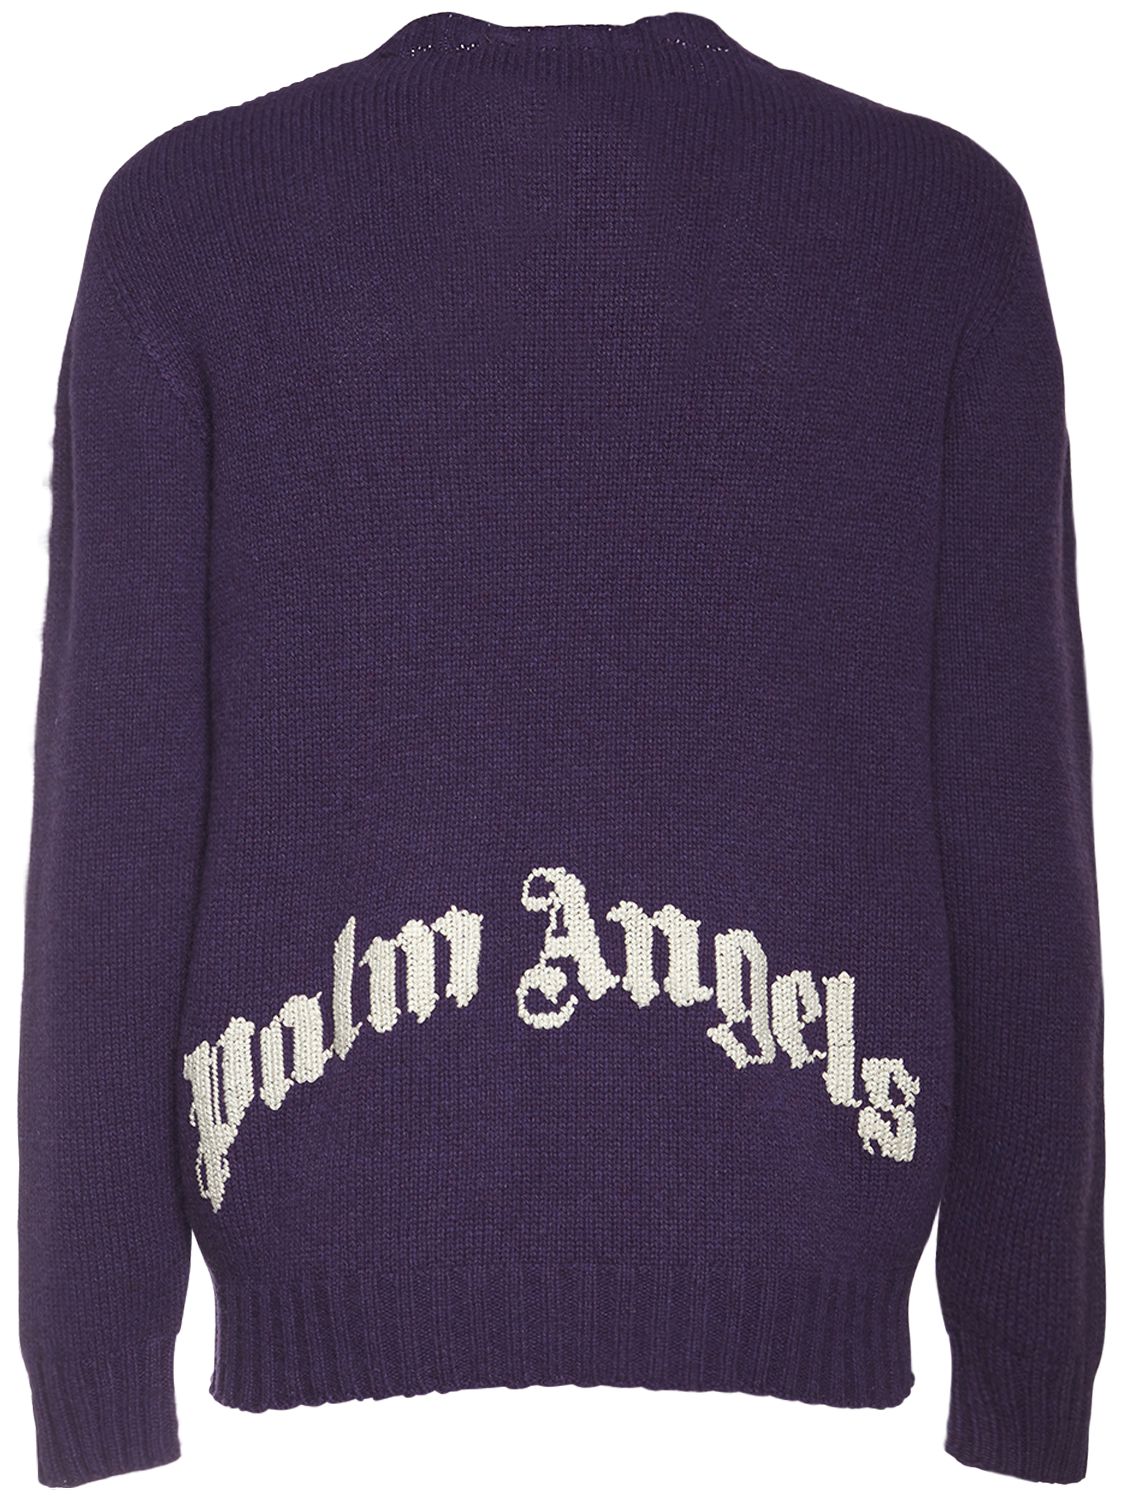 PALM ANGELS LOGO羊毛混纺针织毛衣,72IJRV028-MZCWMQ2